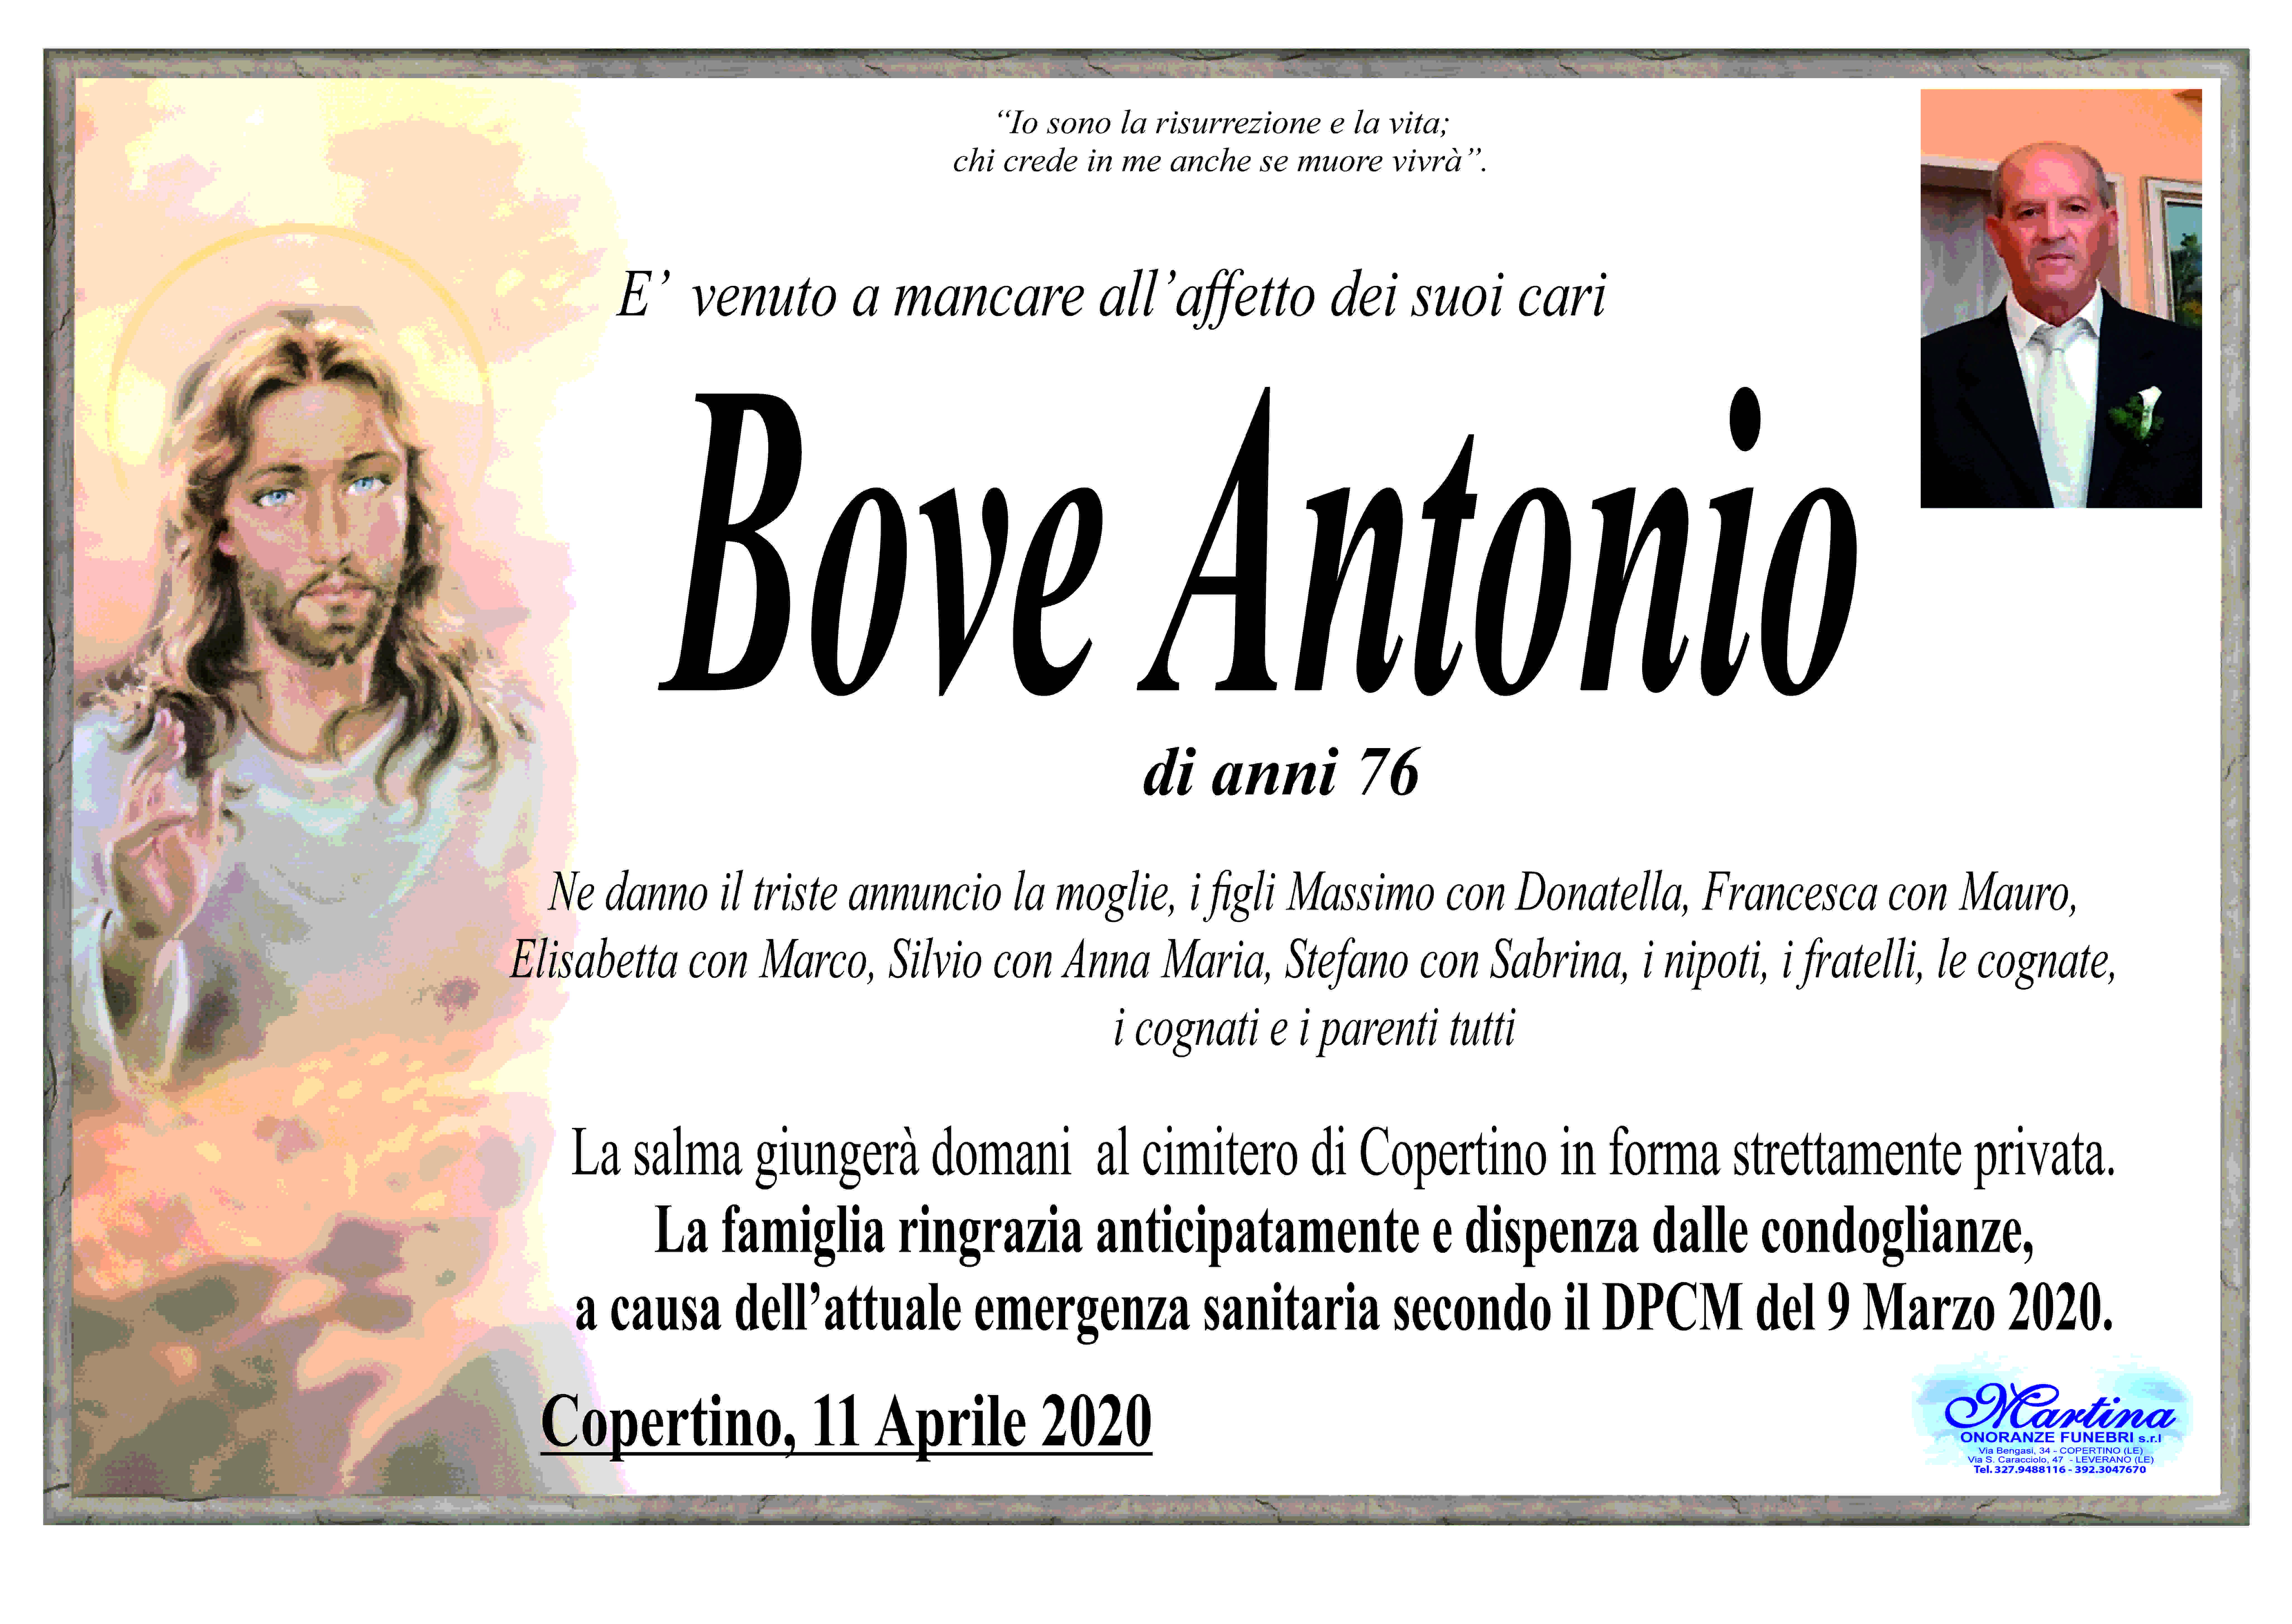 Antonio Bove